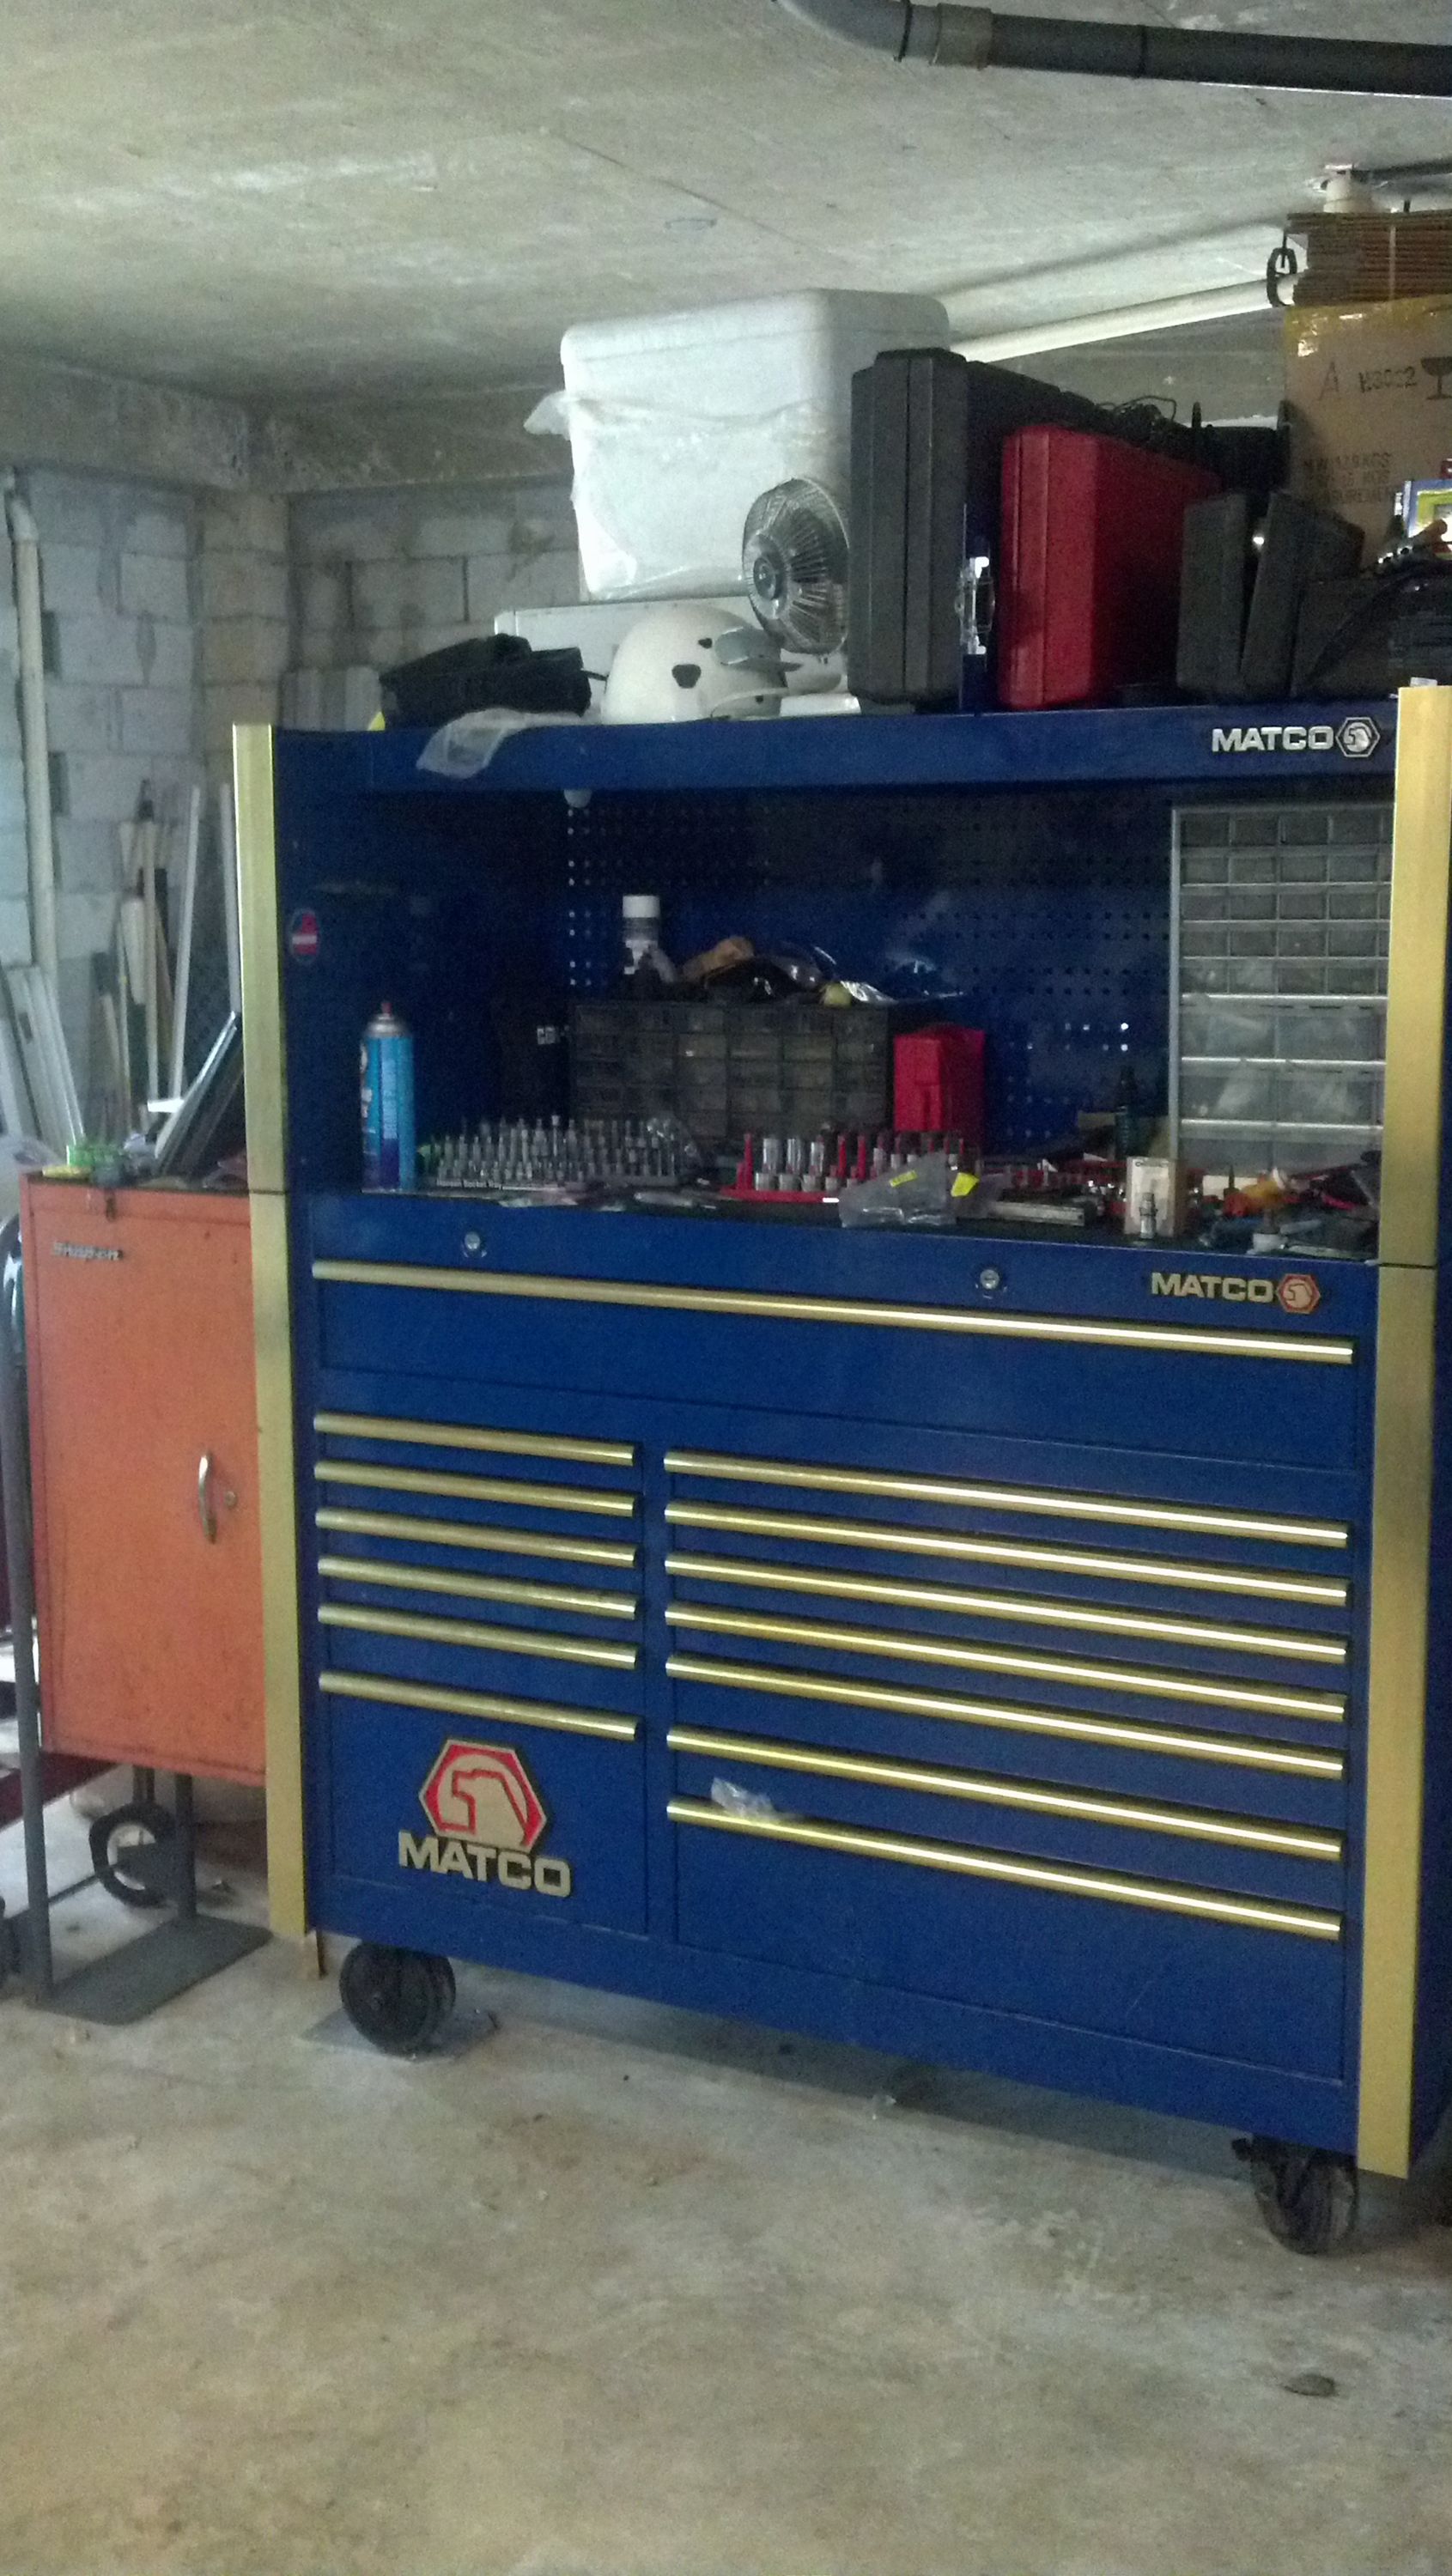 Main tool chest